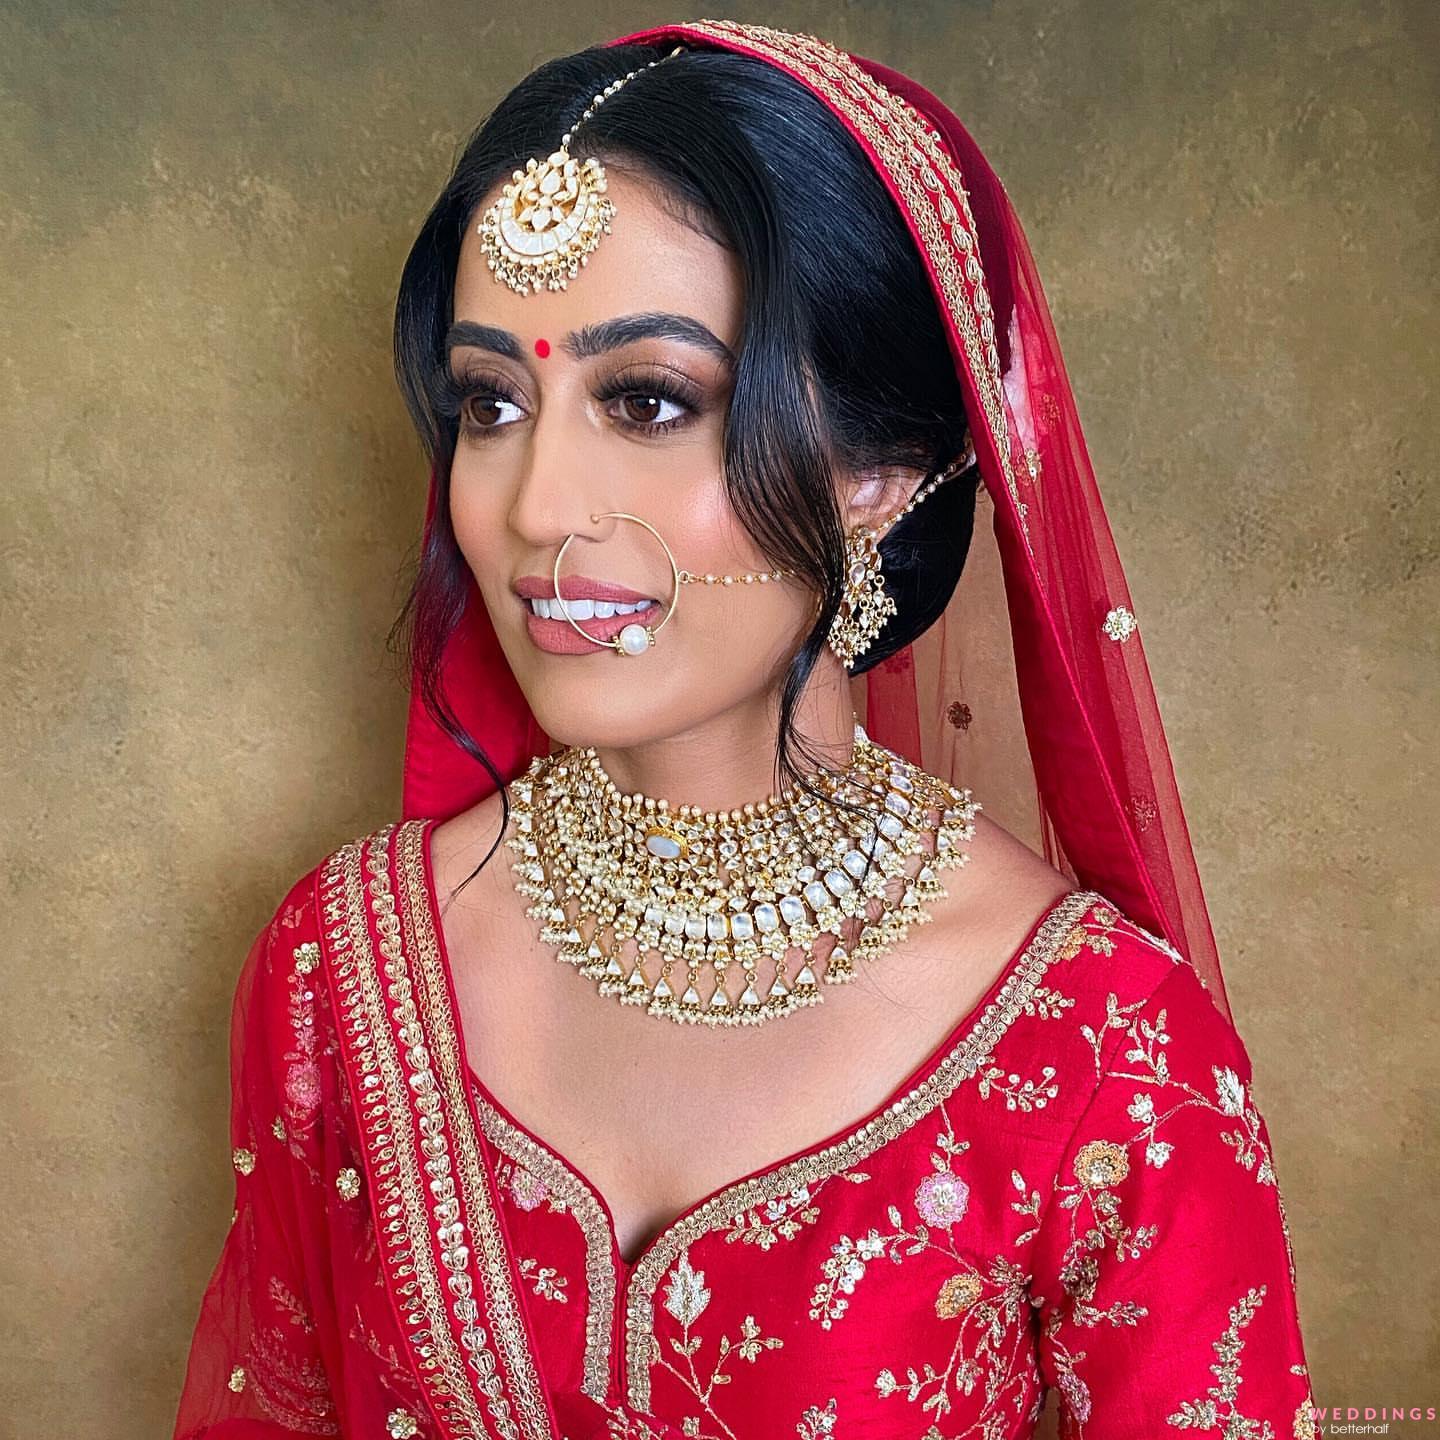 Bride of Patna showicasing its bridal makeup done by Patna… | Flickr